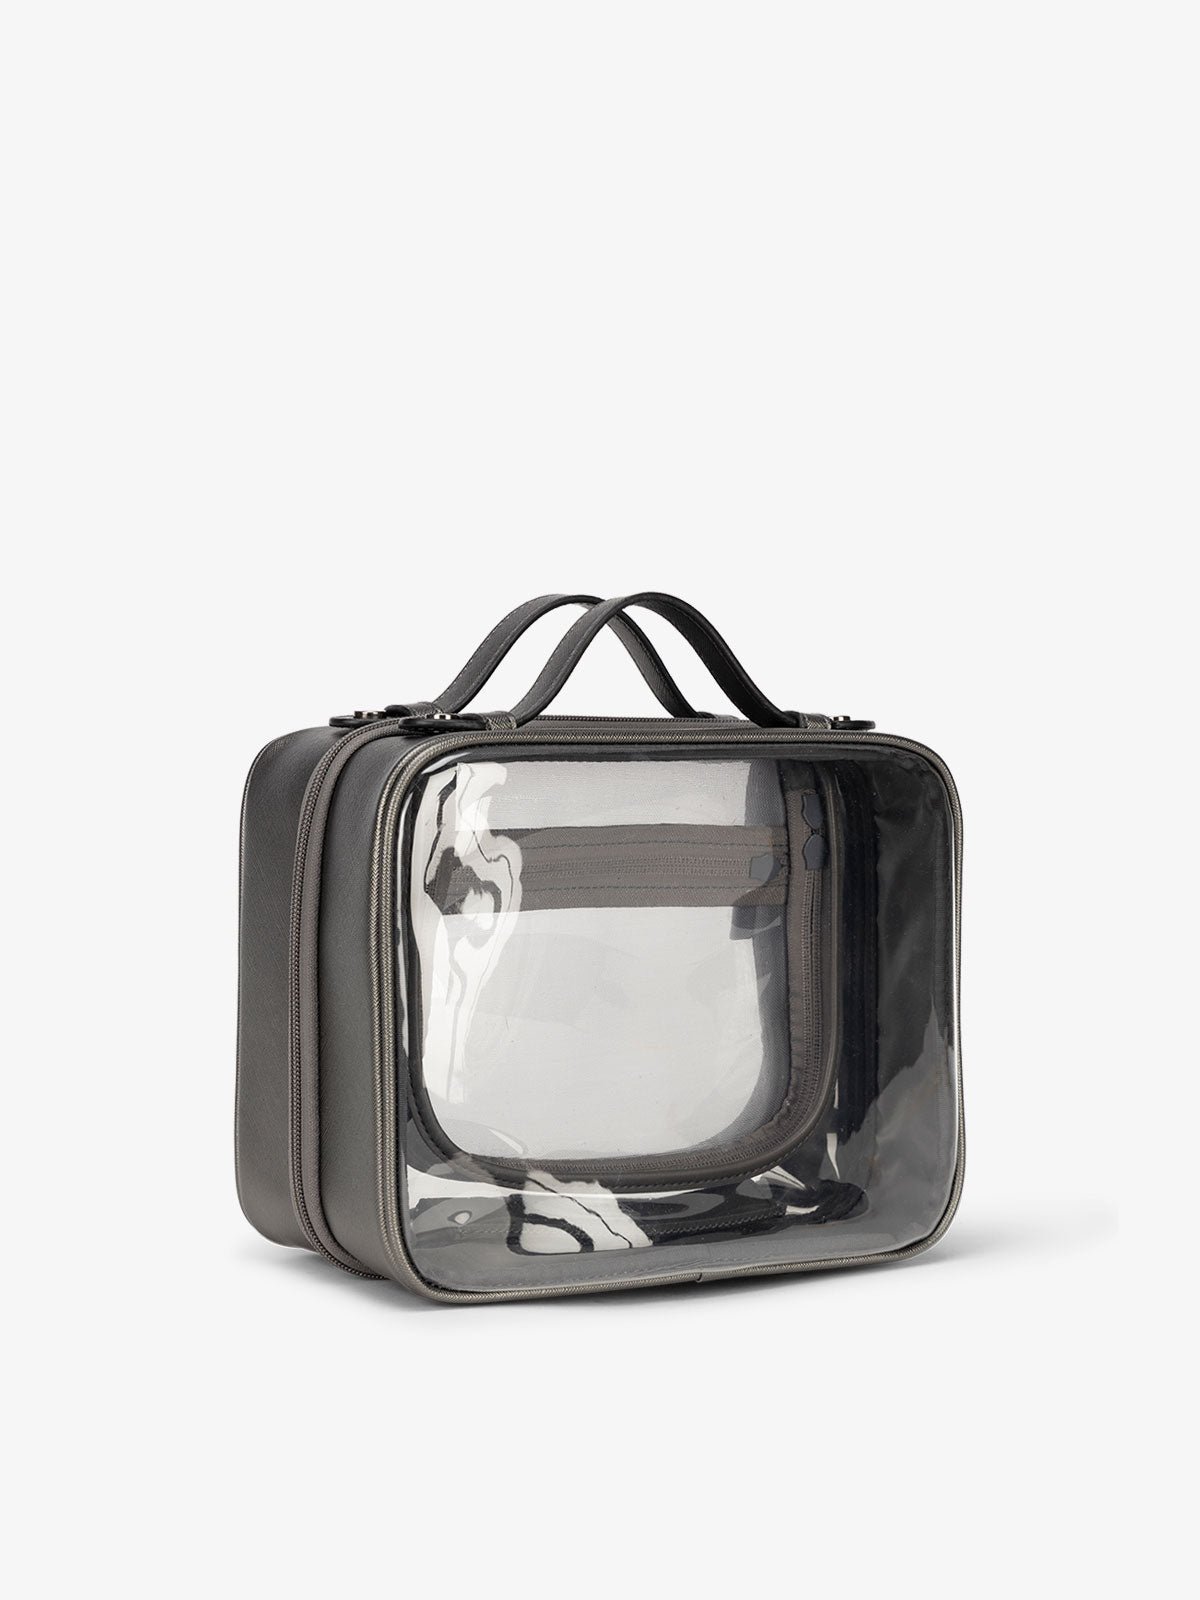 CALPAK clear makeup bag with top handles in steel